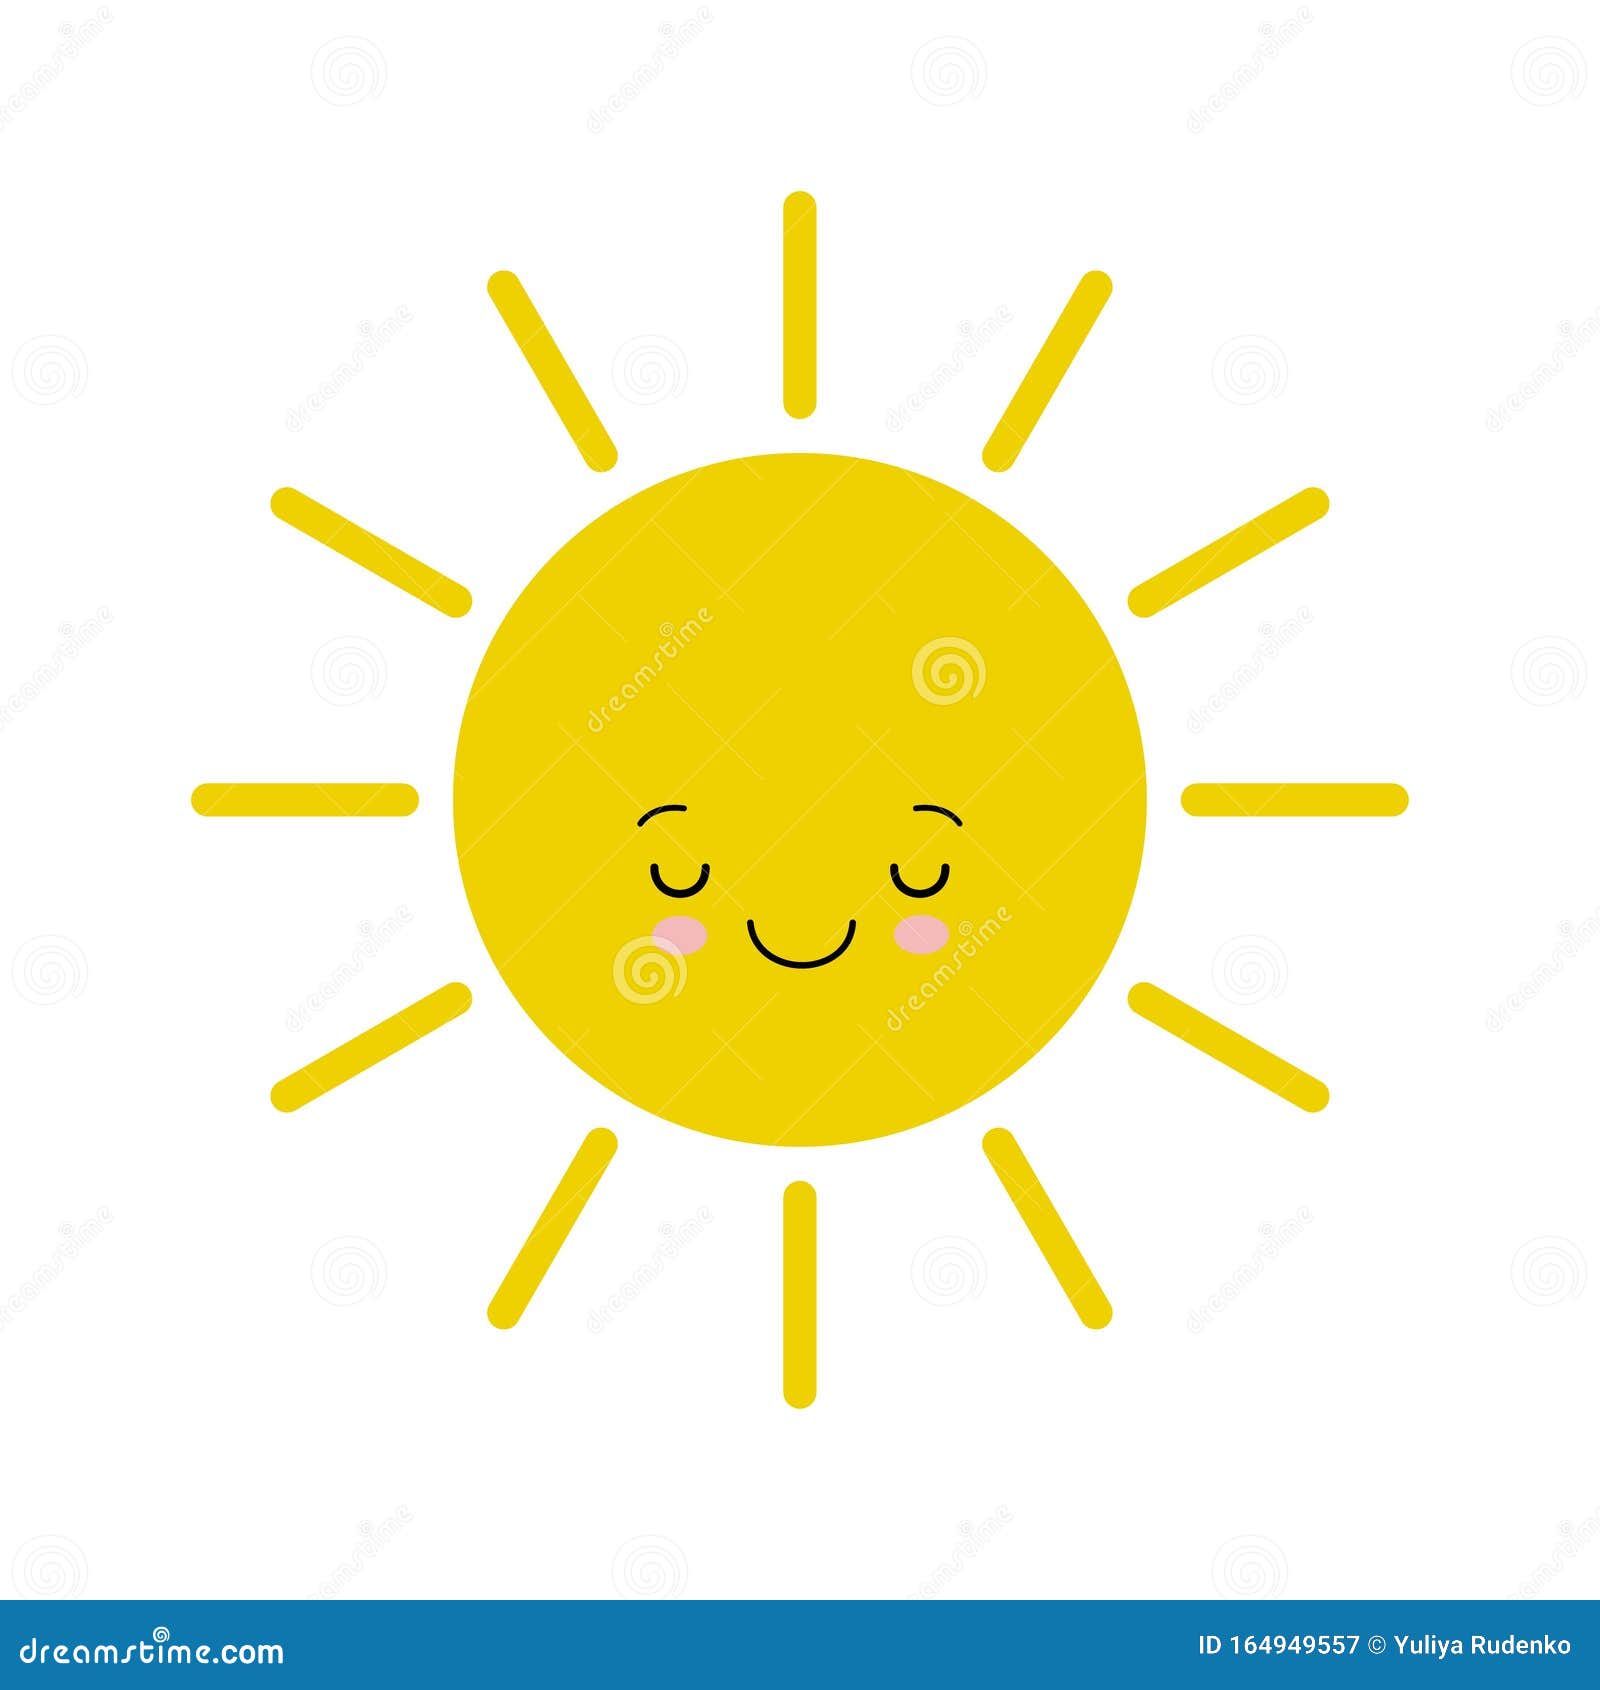 Flat Design Smiling Cartoon Sun Isolated on White Background. Kawaii  Illustration Stock Vector - Illustration of creative, icon: 164949557